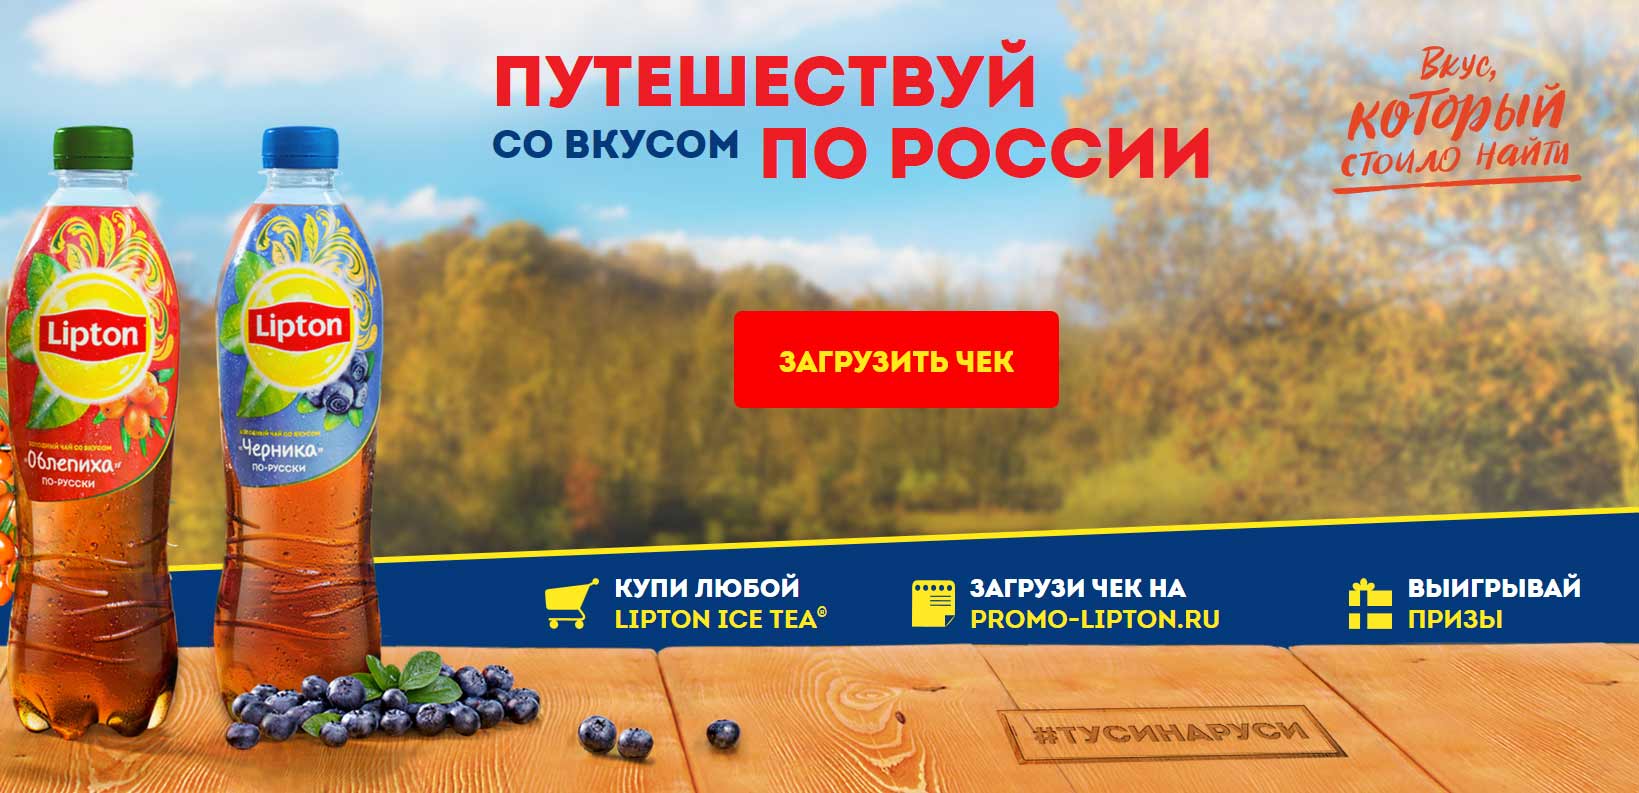 magnit.promo-lipton.ru регистрация